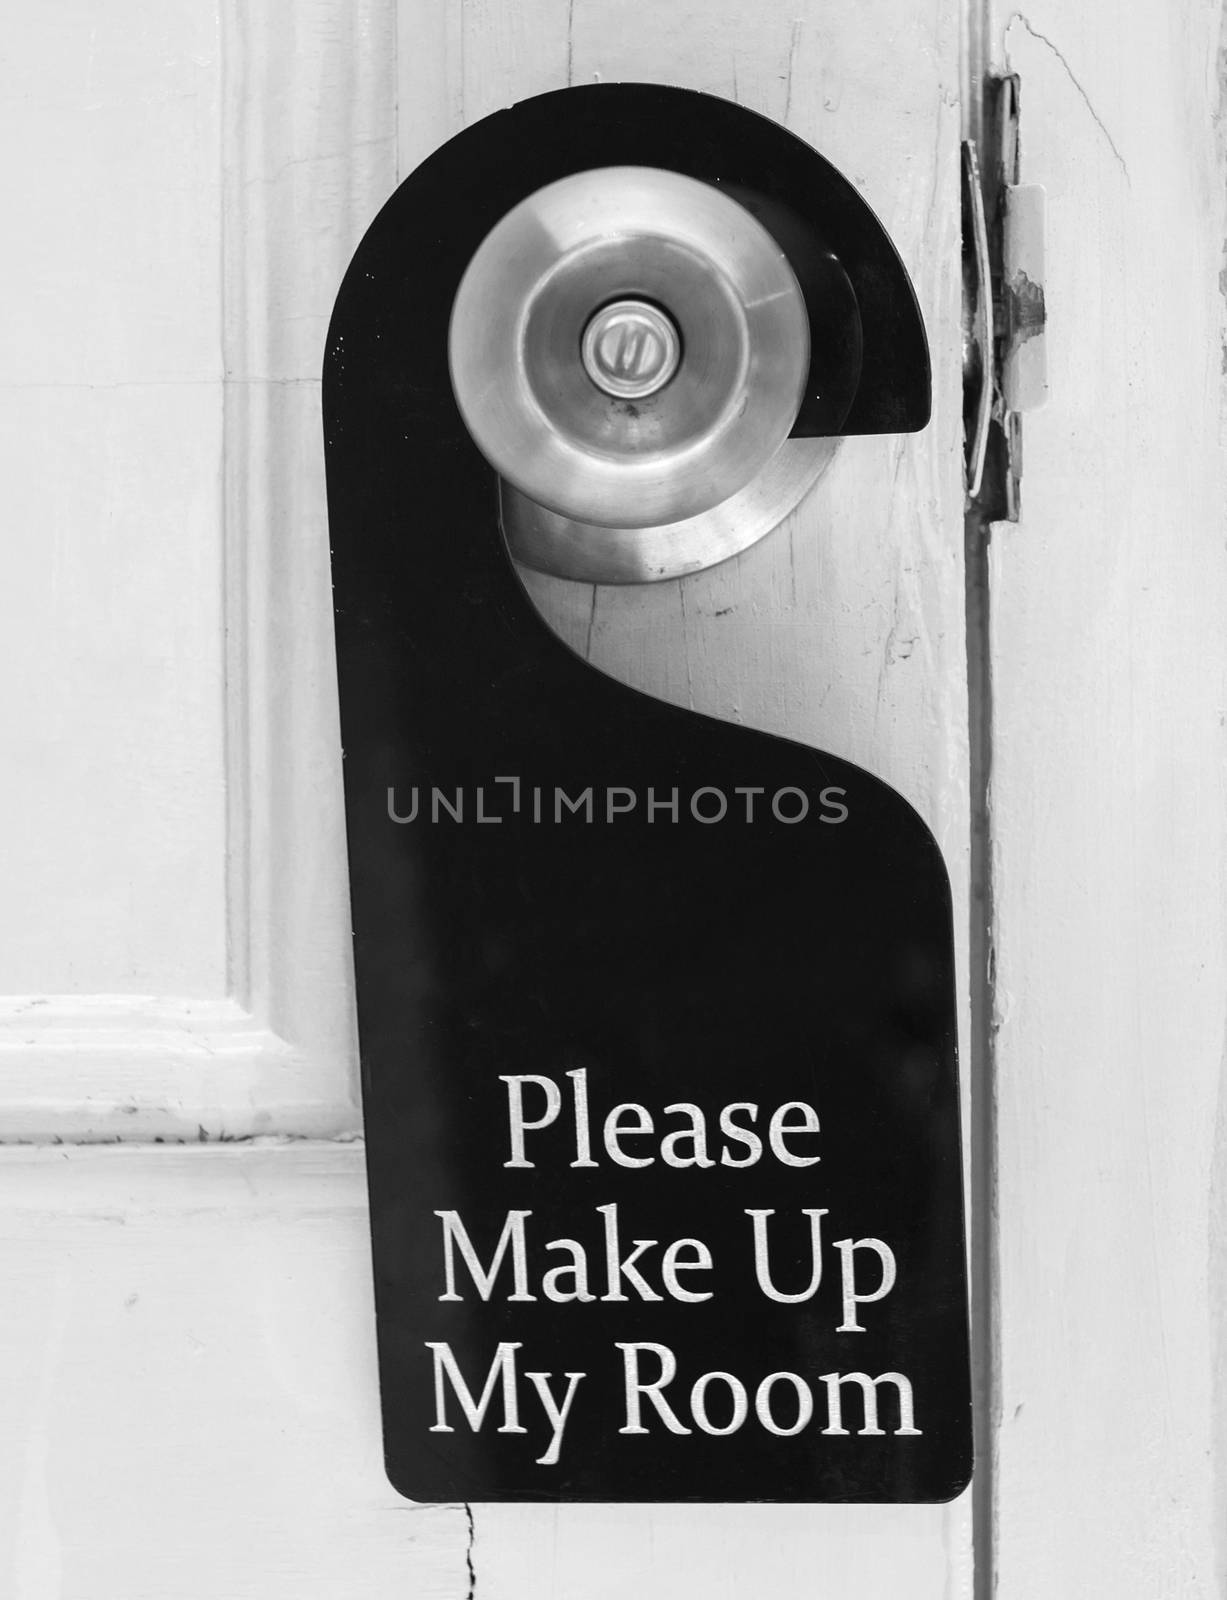 Please make up my room sign on door knob in hotel